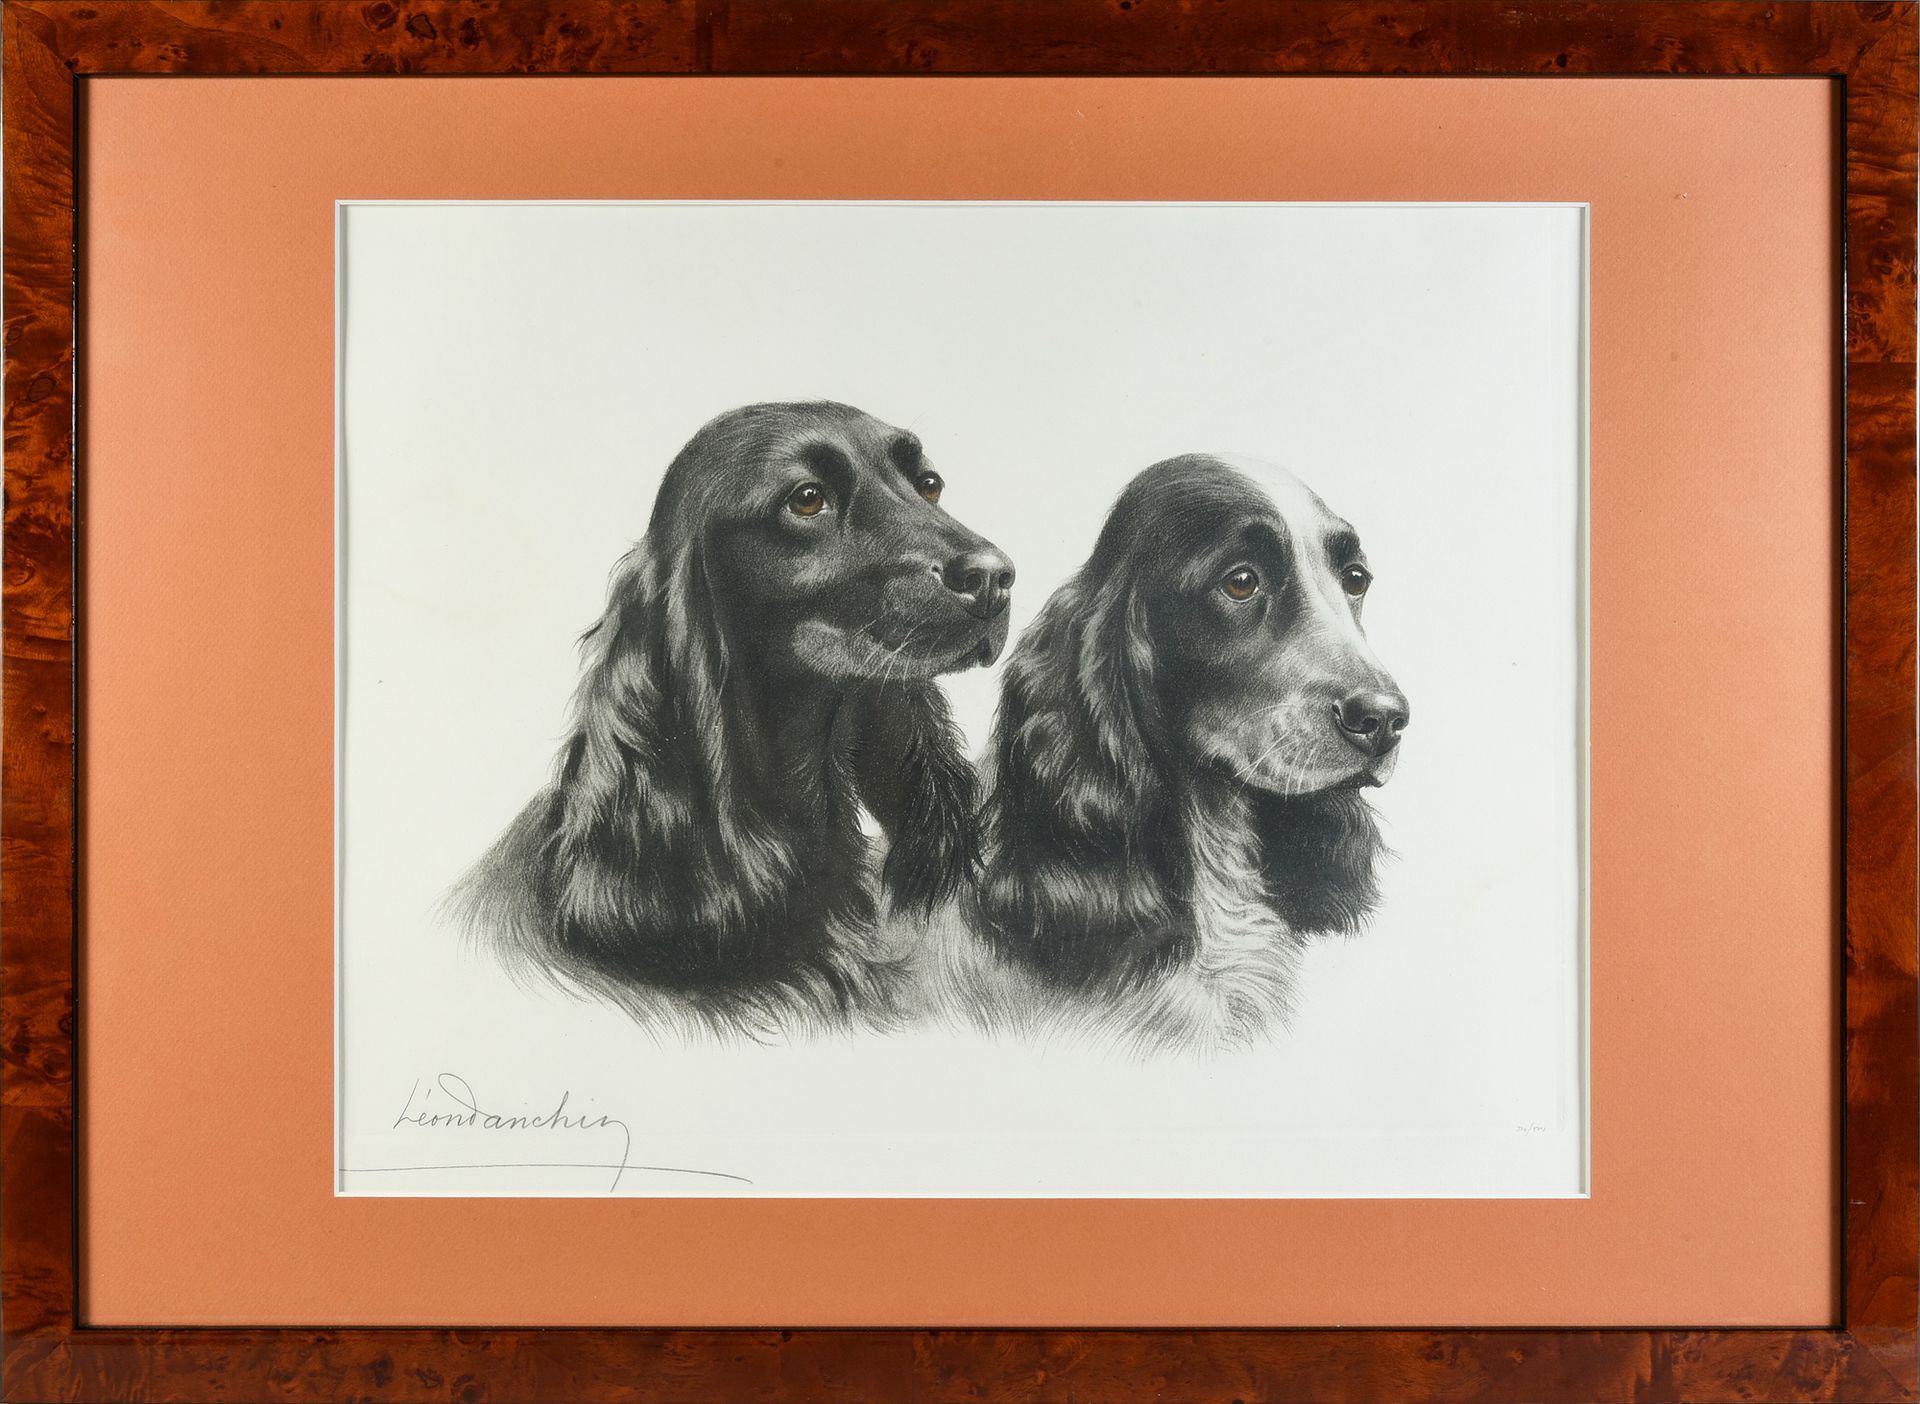 Léon DANCHIN (1887 - 1938) 两只可卡犬的头。
左下角有签名和编号的雕版画
39 x 49 cm